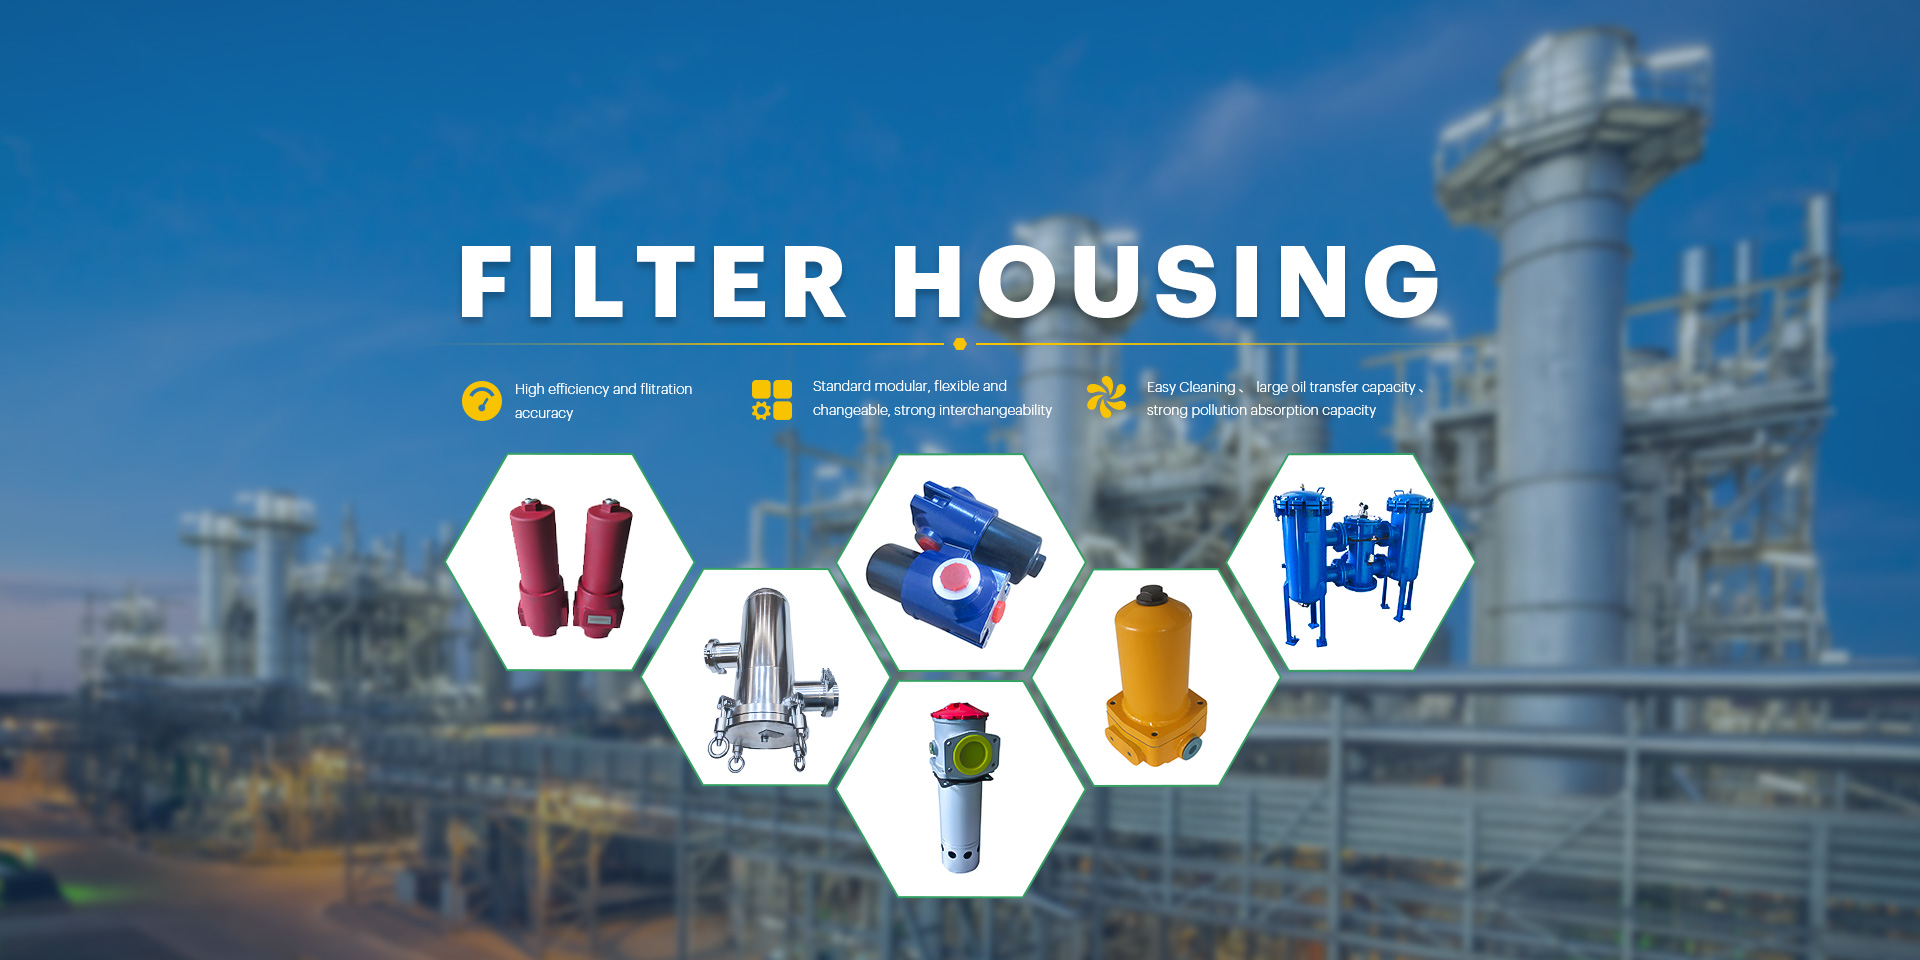 Filter housing